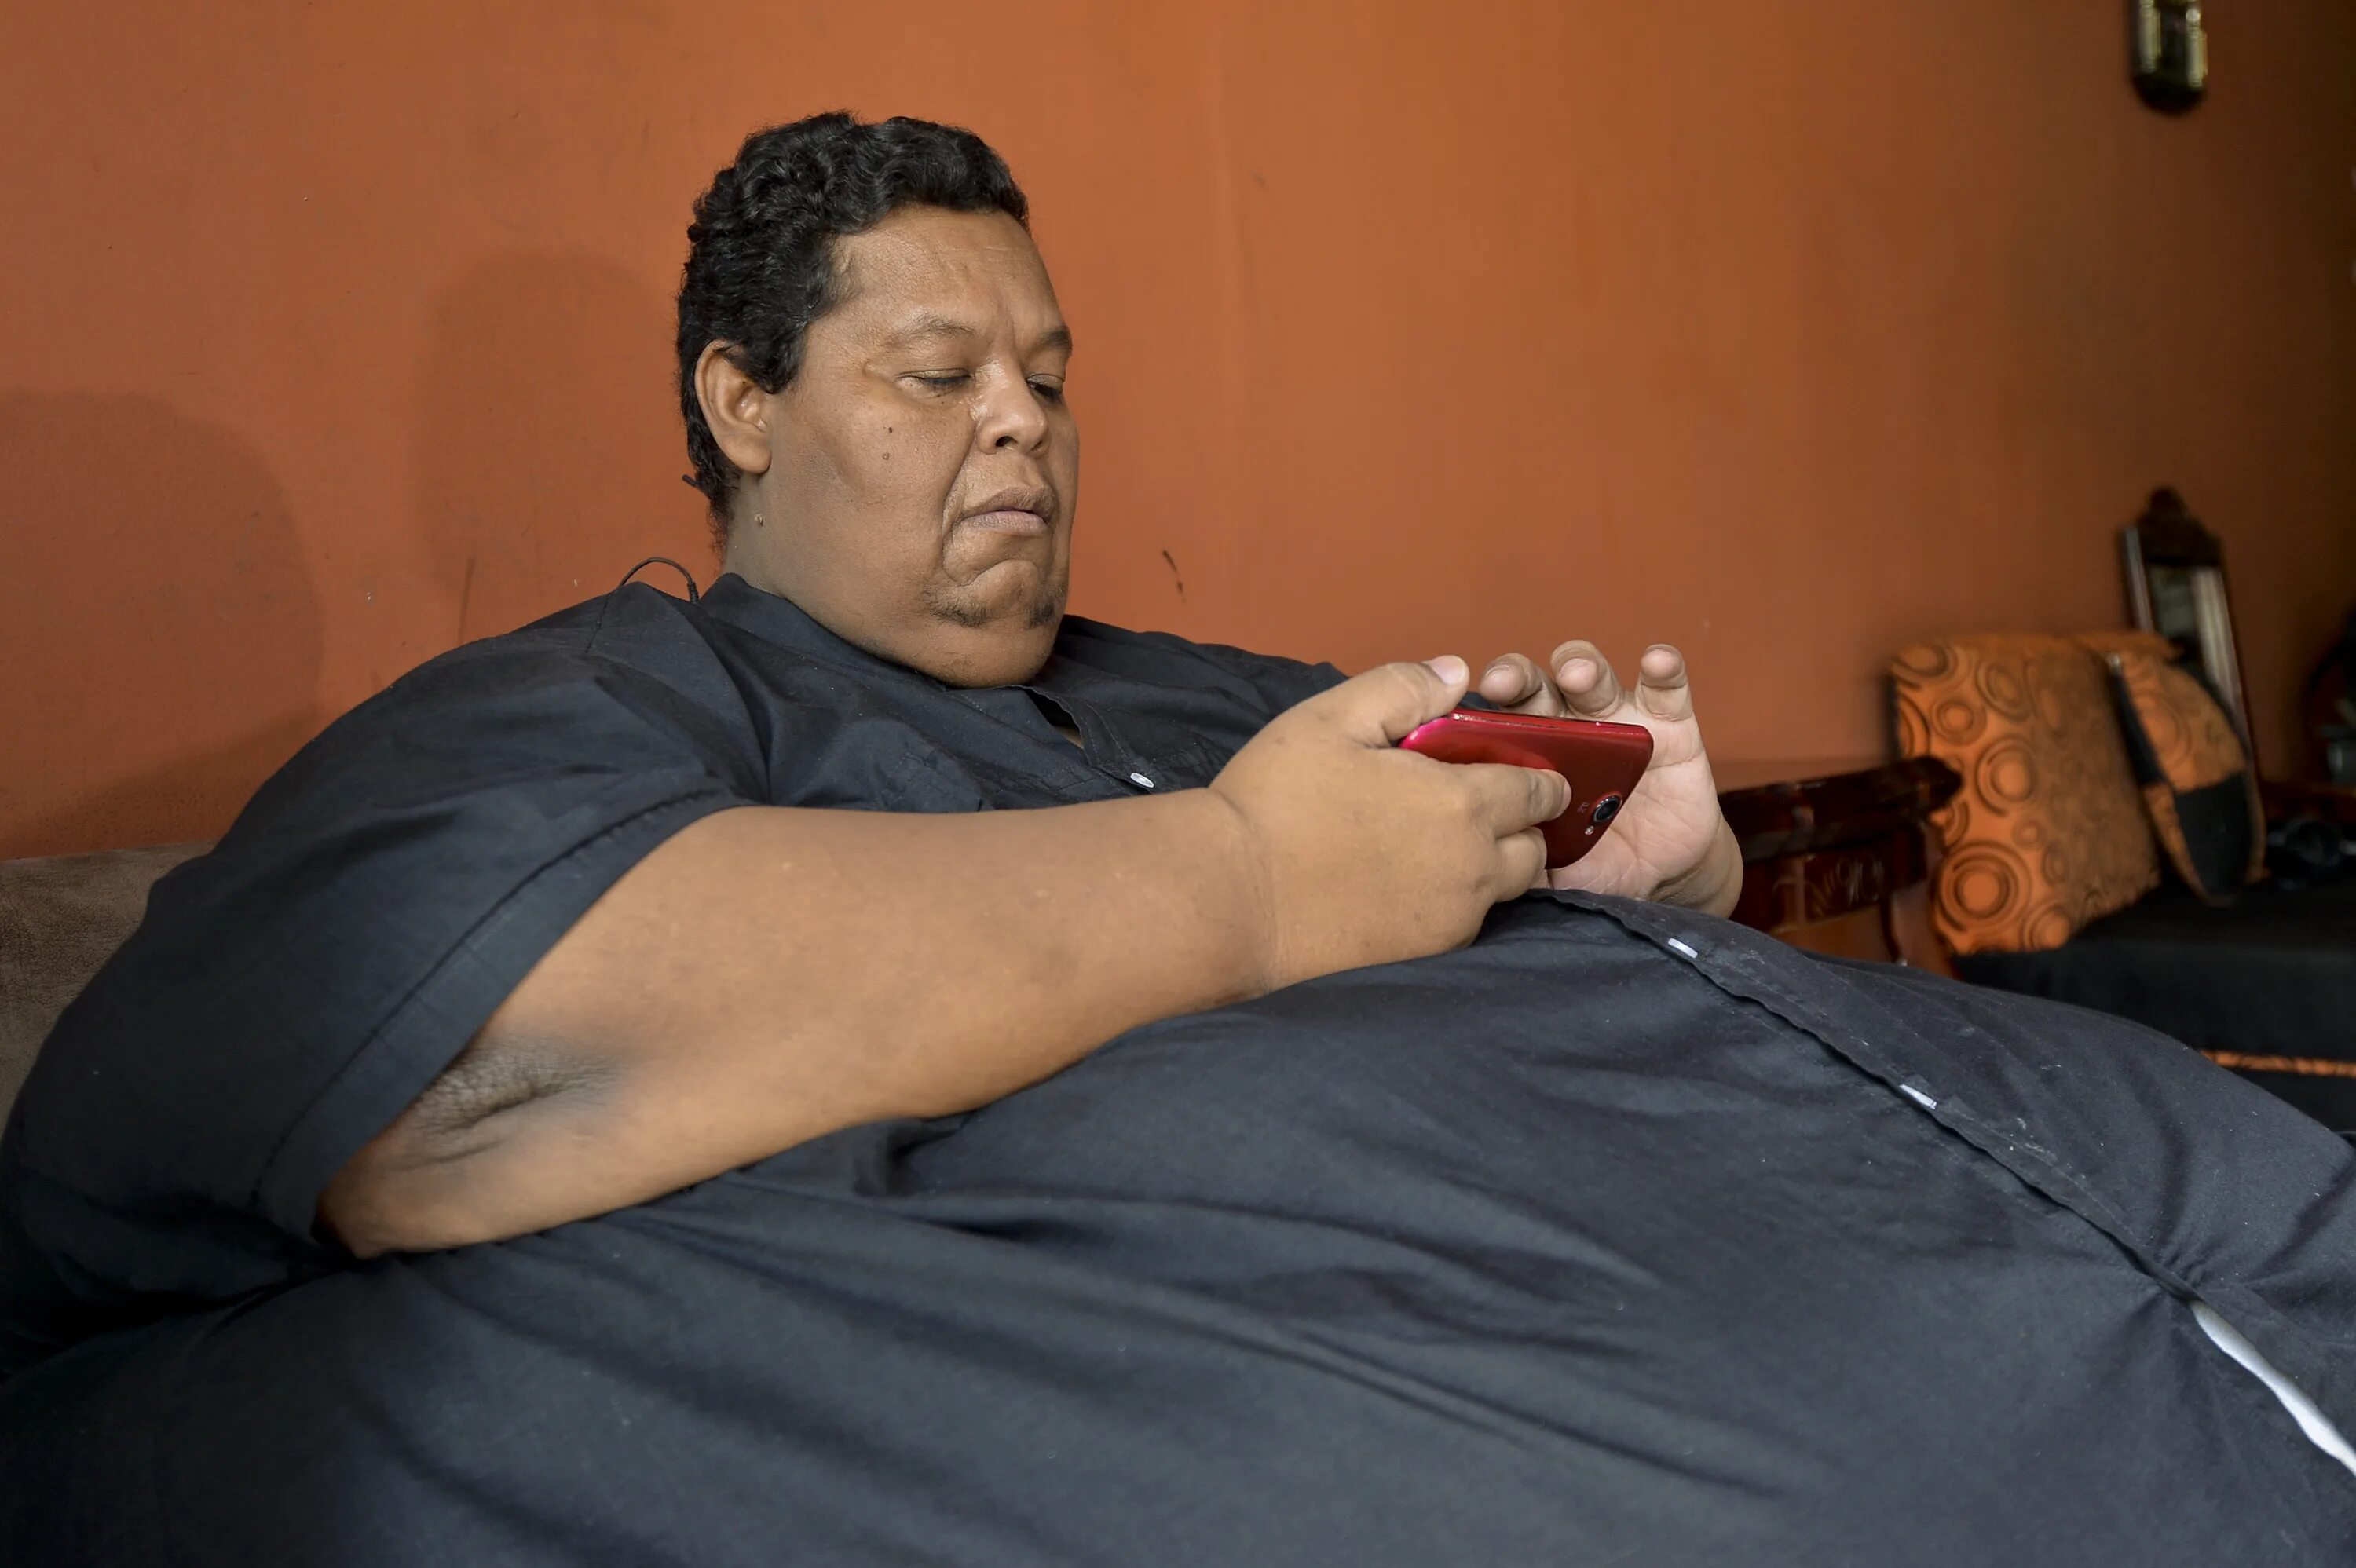 Хуан Педро Франко 600 кг. Хуан Педро Франко Салас 2018. Очень жирный человек